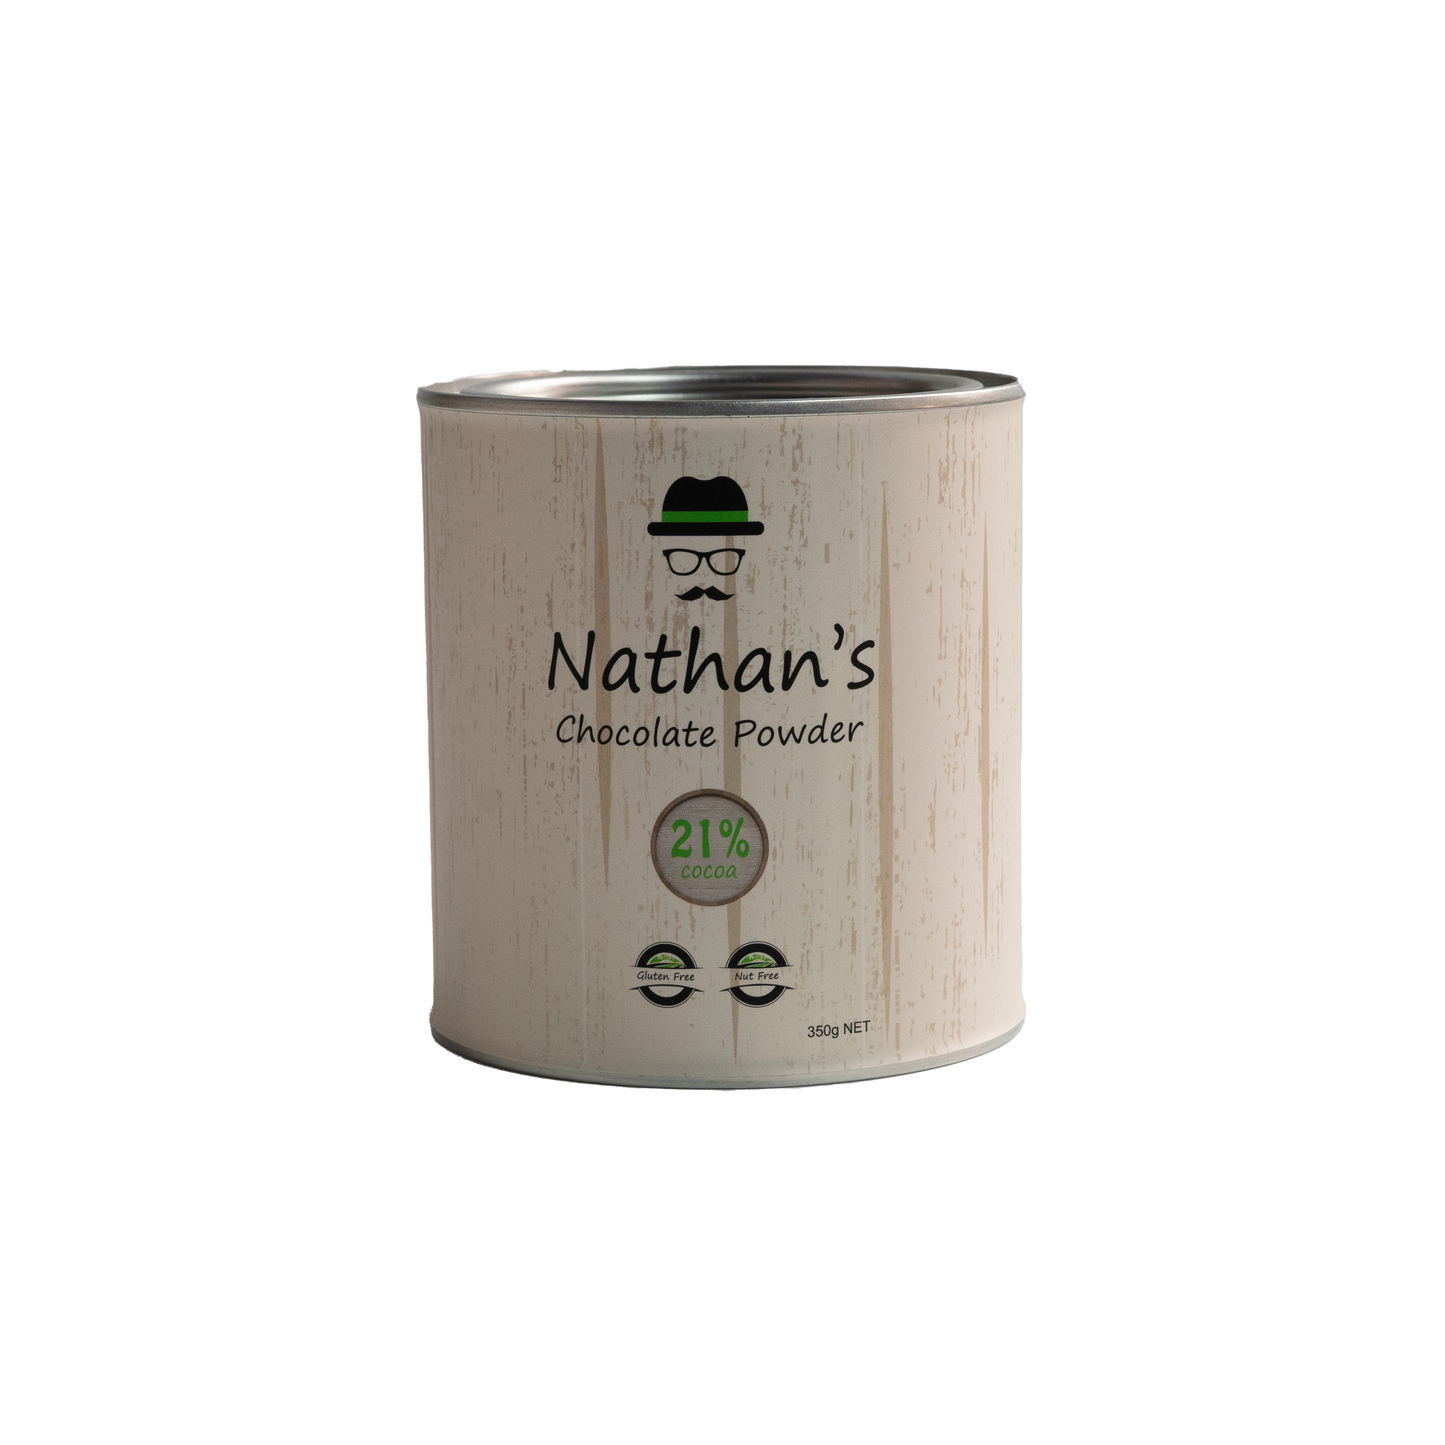 Nathan's Chocolate Powder